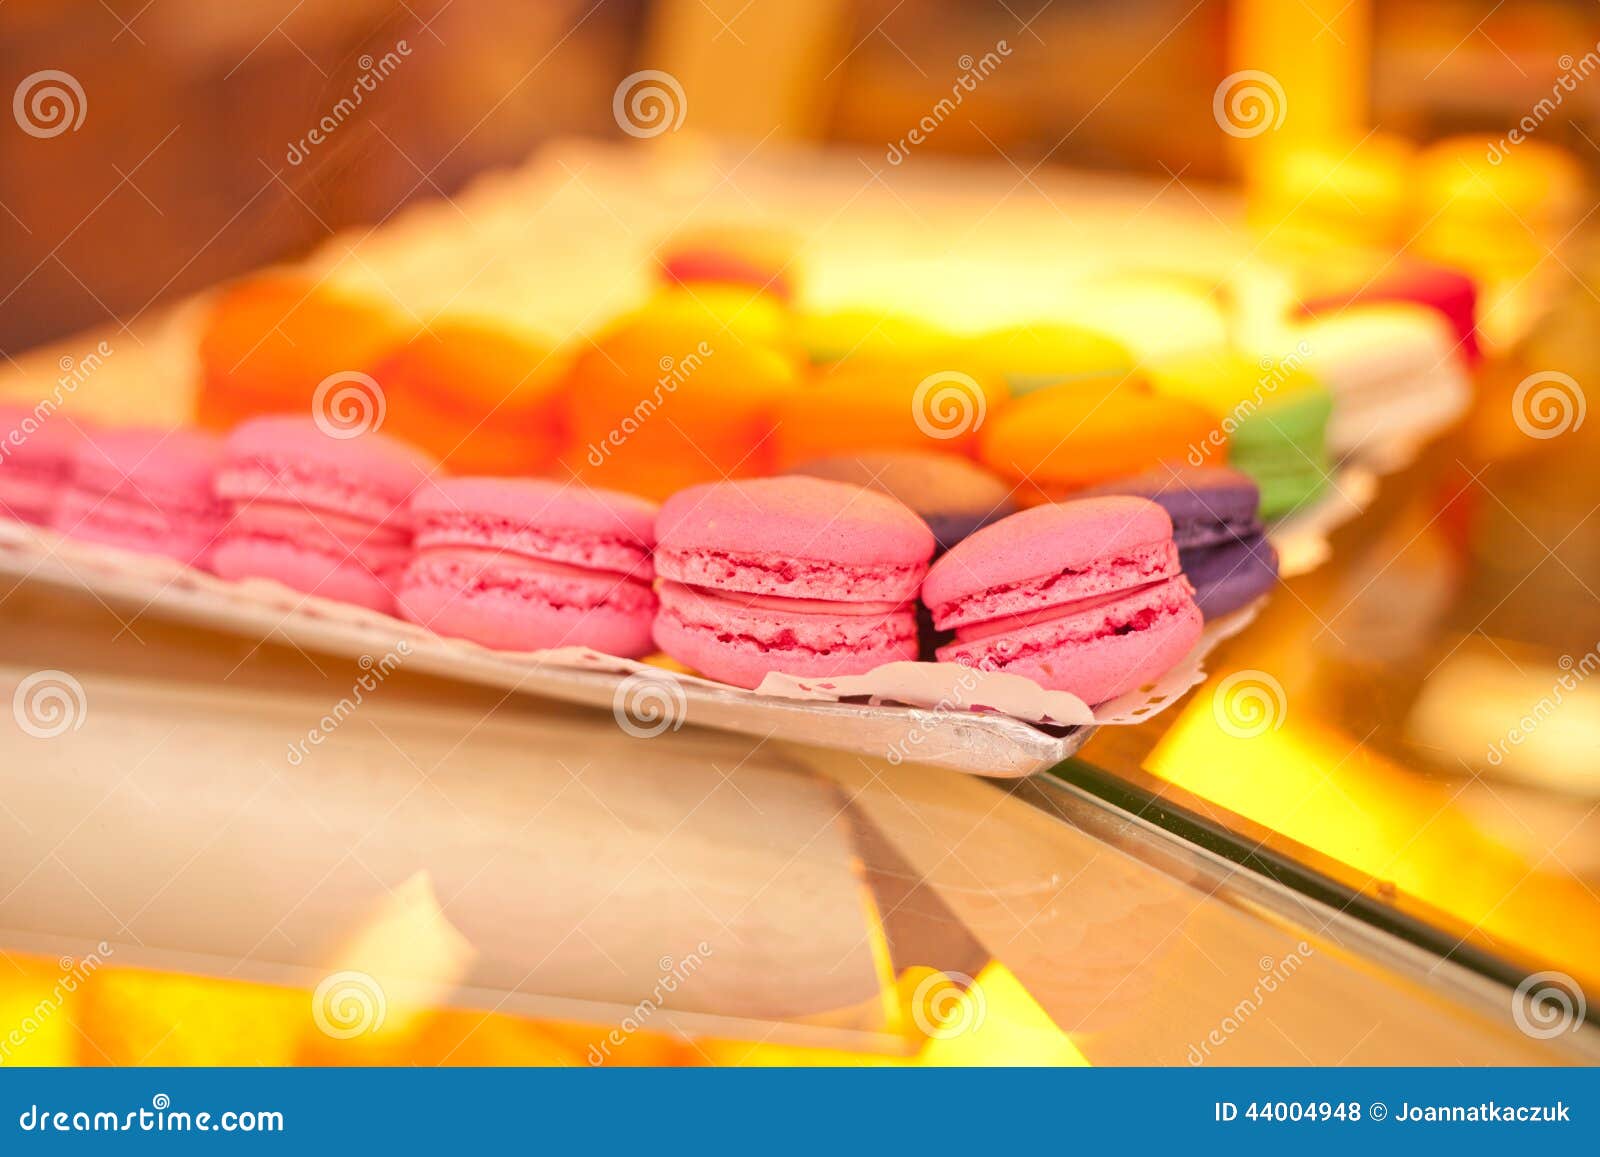 colorful macaroni cakes